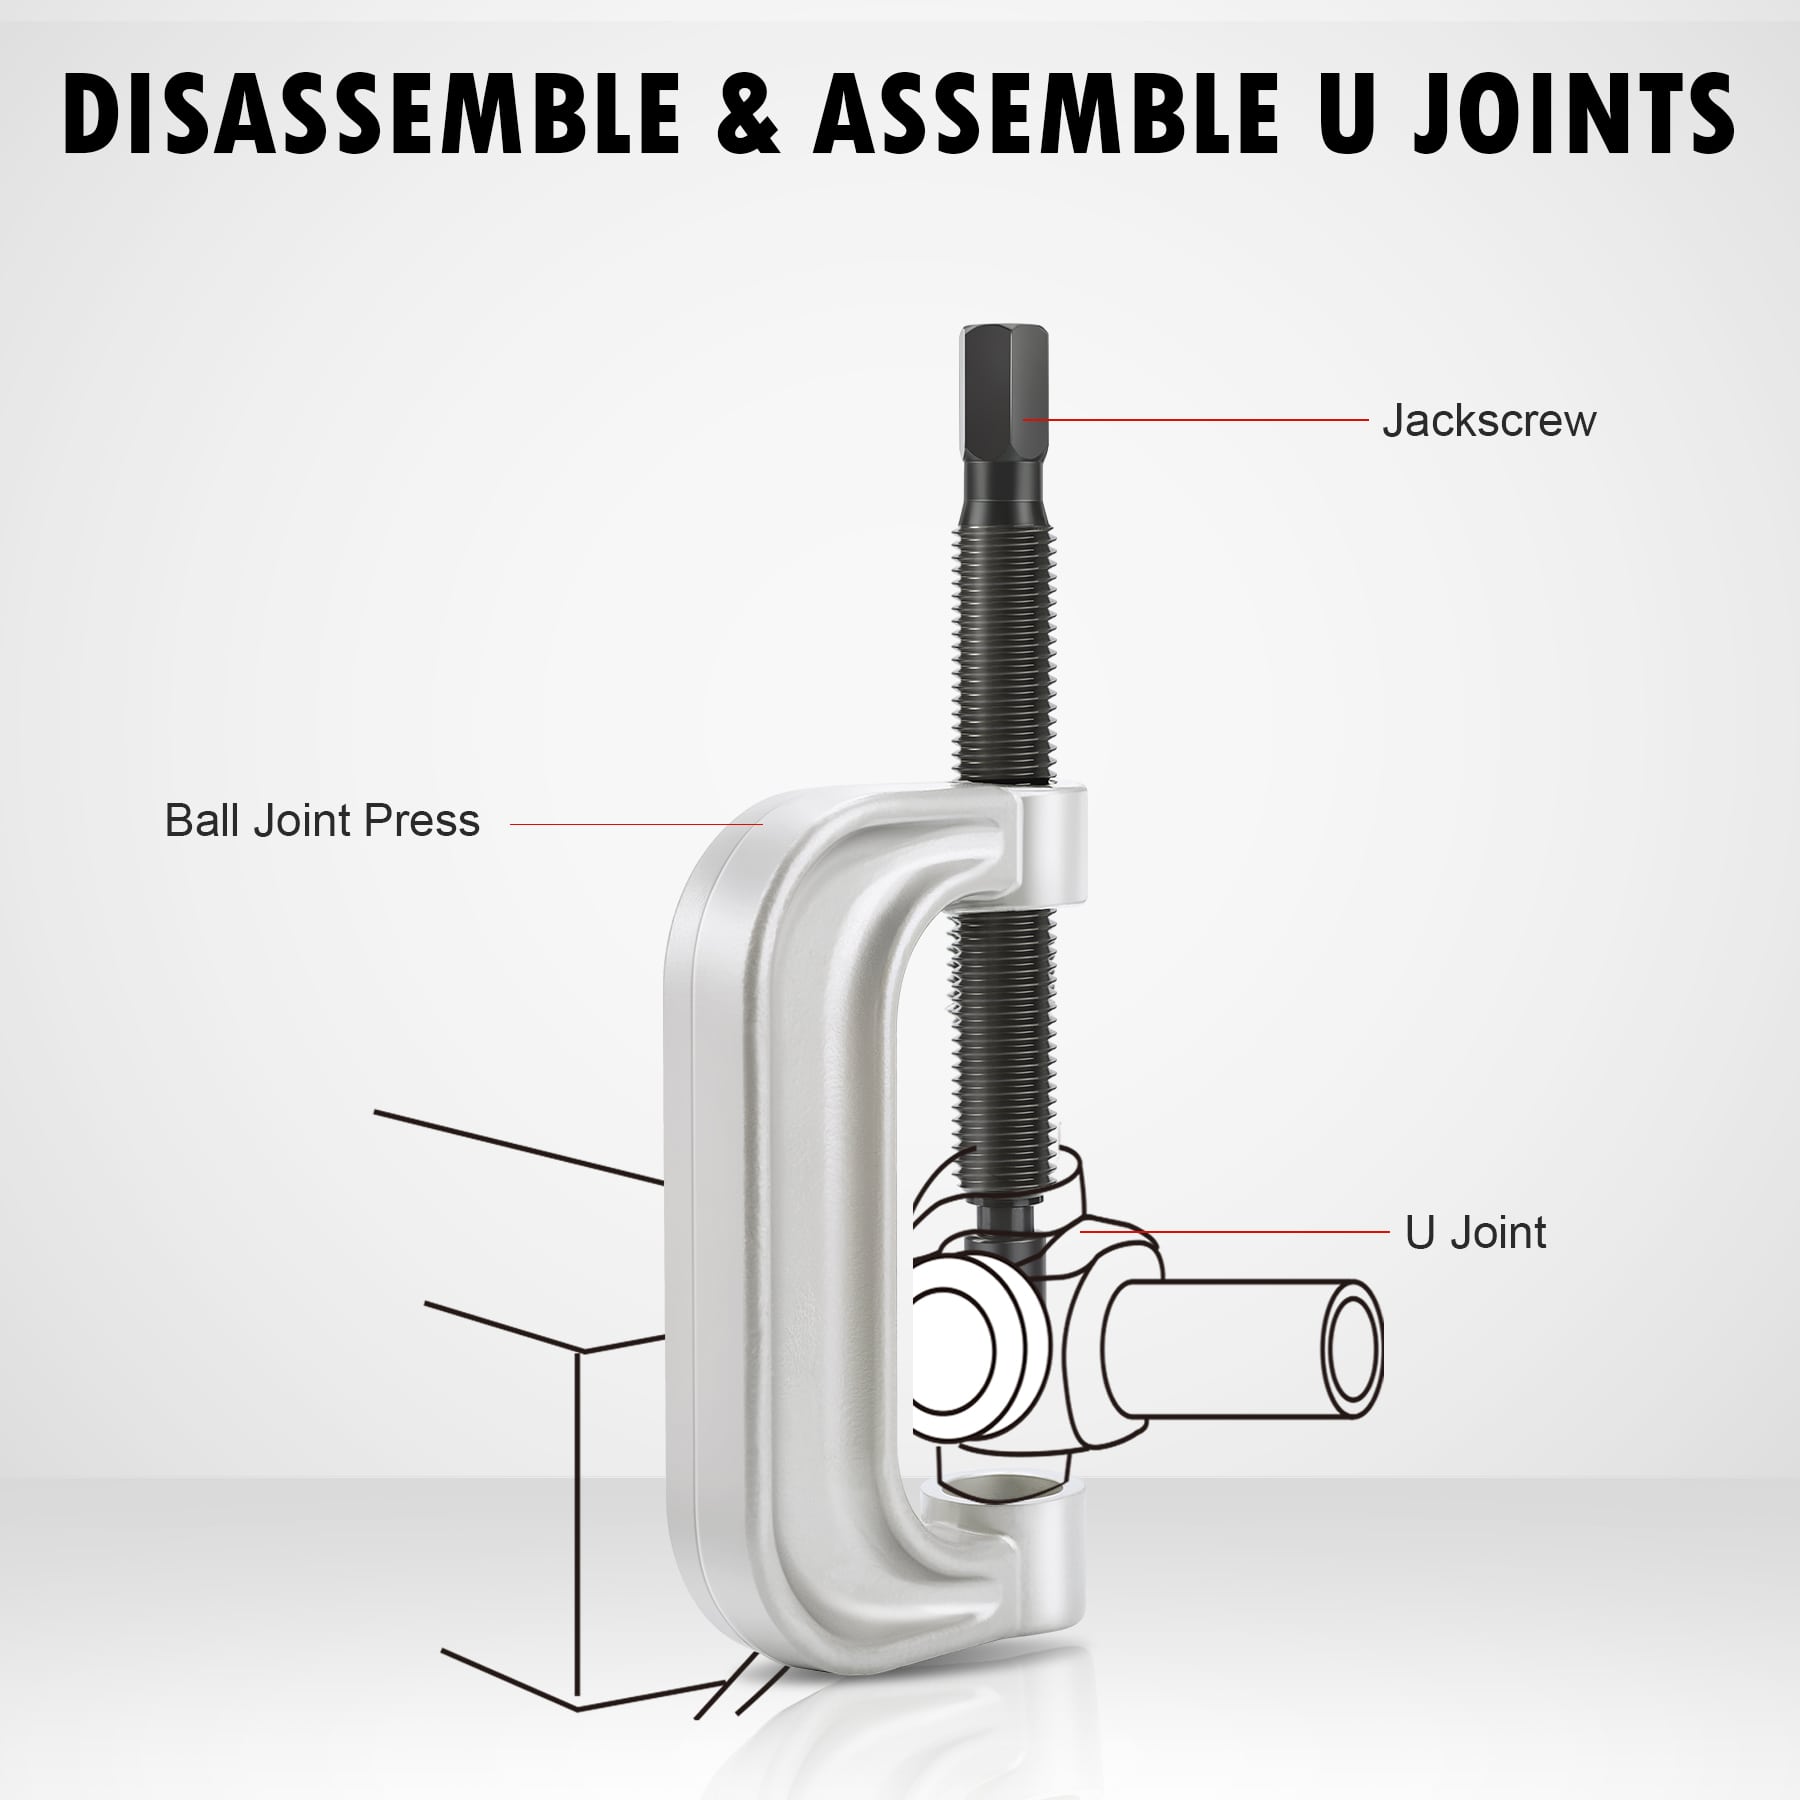 Disassemble & Assemble U Joints